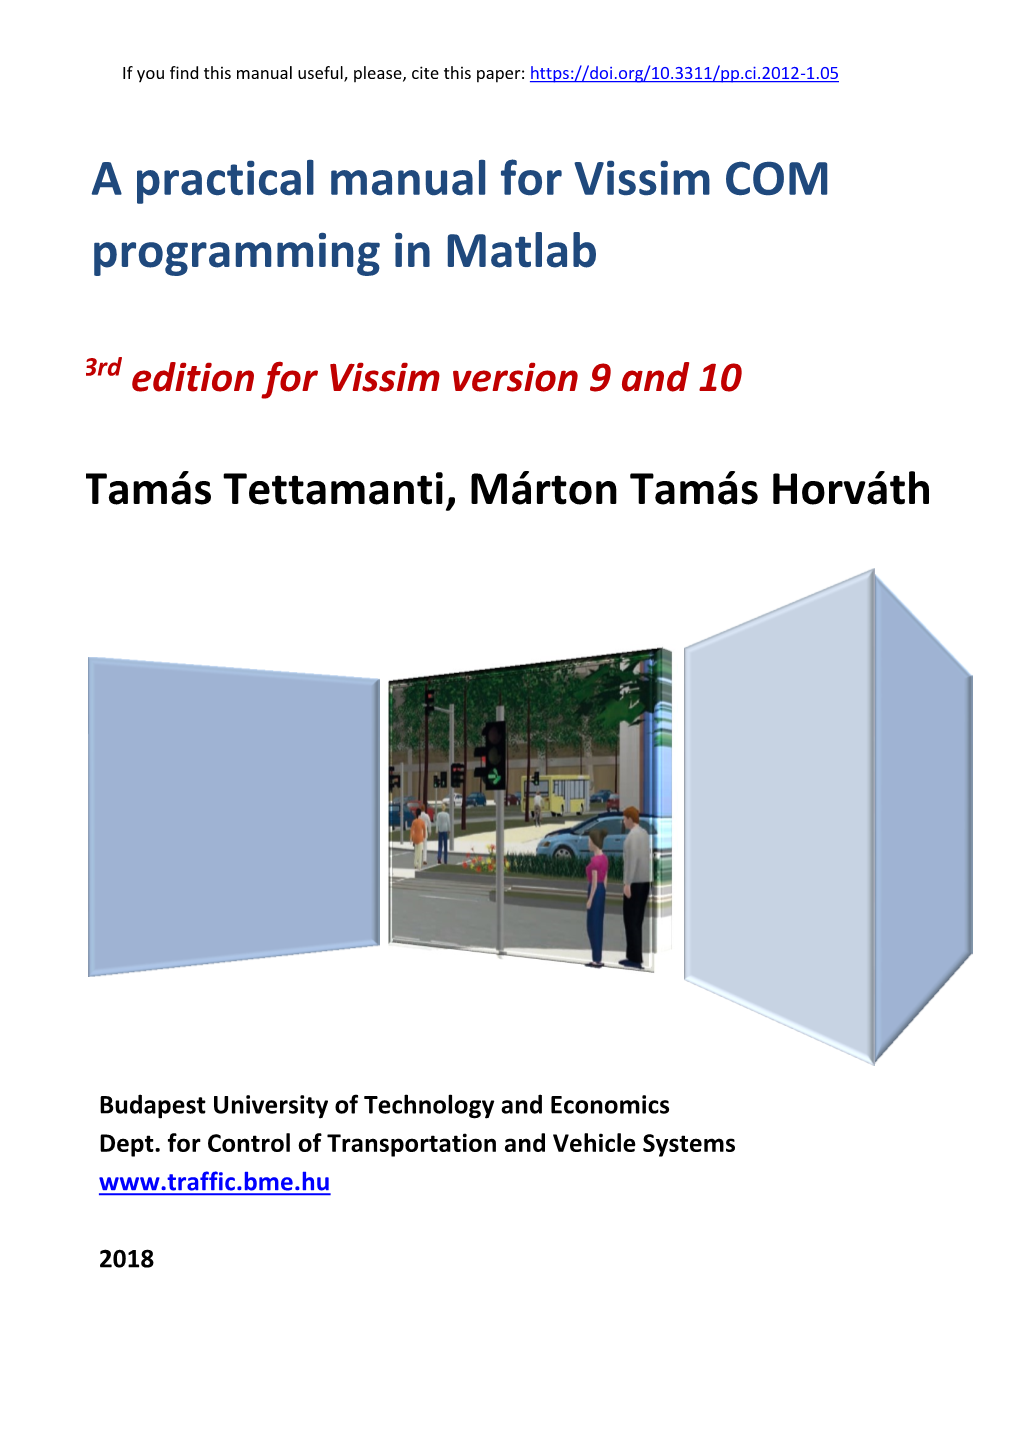 A Practical Manual for Vissim COM Programming in Matlab